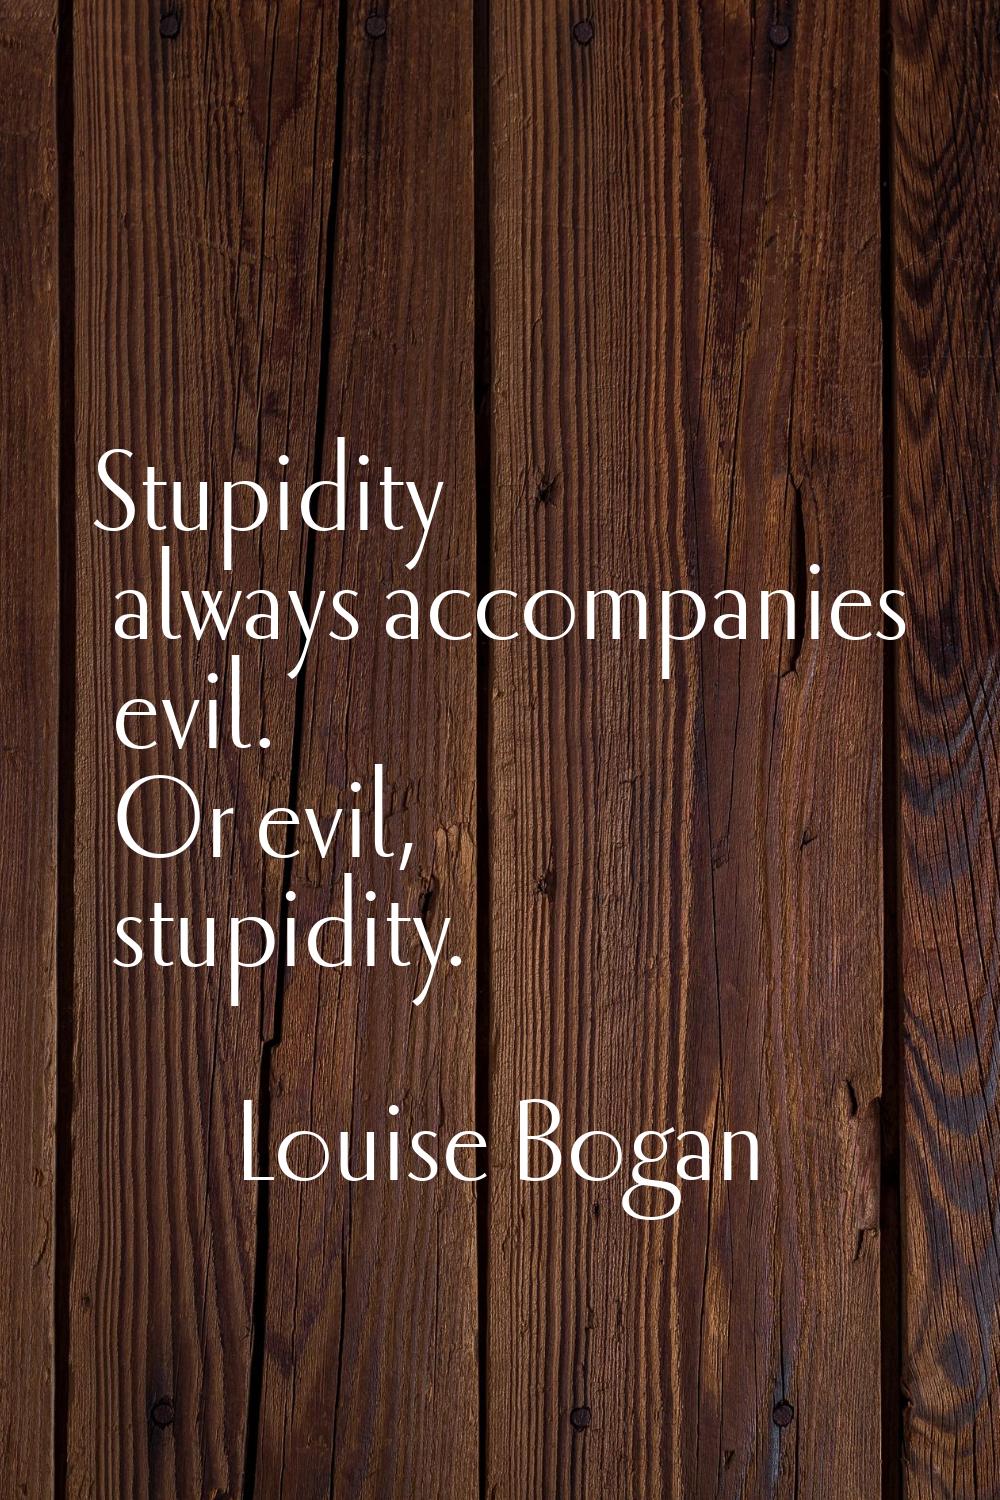 Stupidity always accompanies evil. Or evil, stupidity.